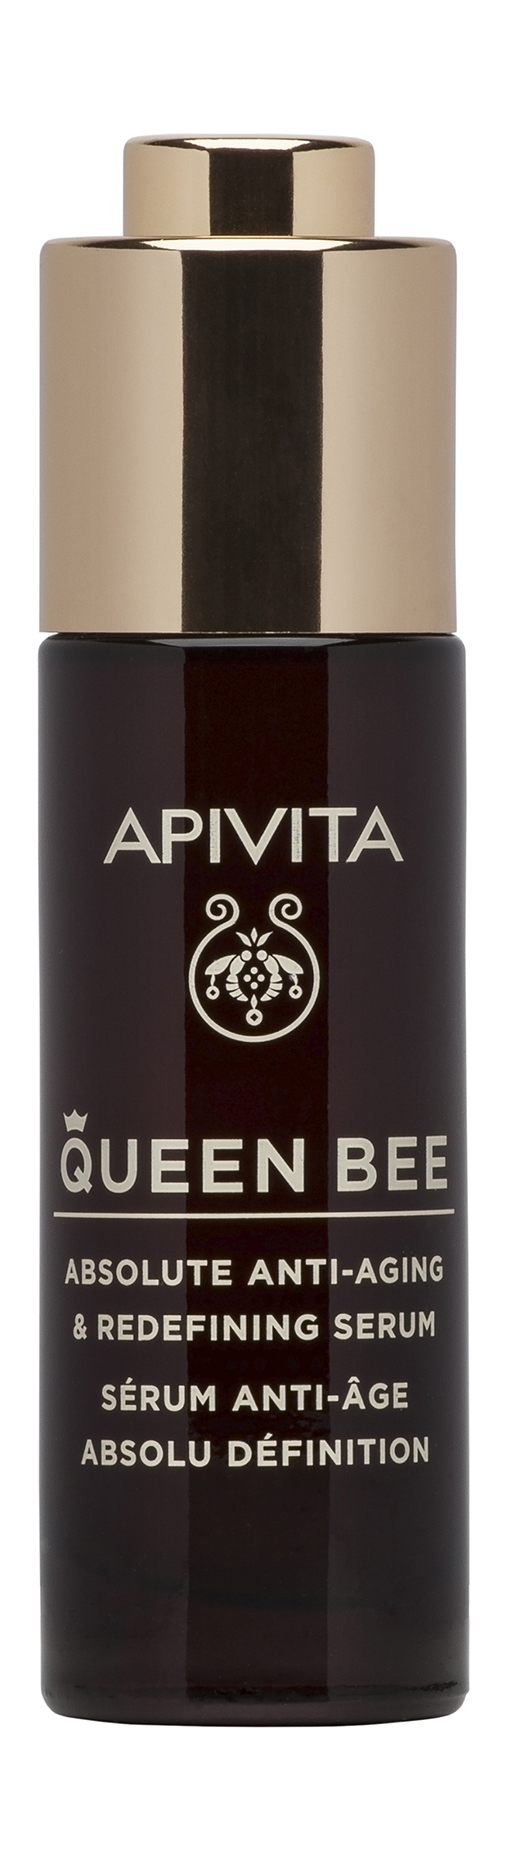 Антивозростная сыворотка Apivita Queen Bee Absolute Anti-Aging & Redefinning Serum